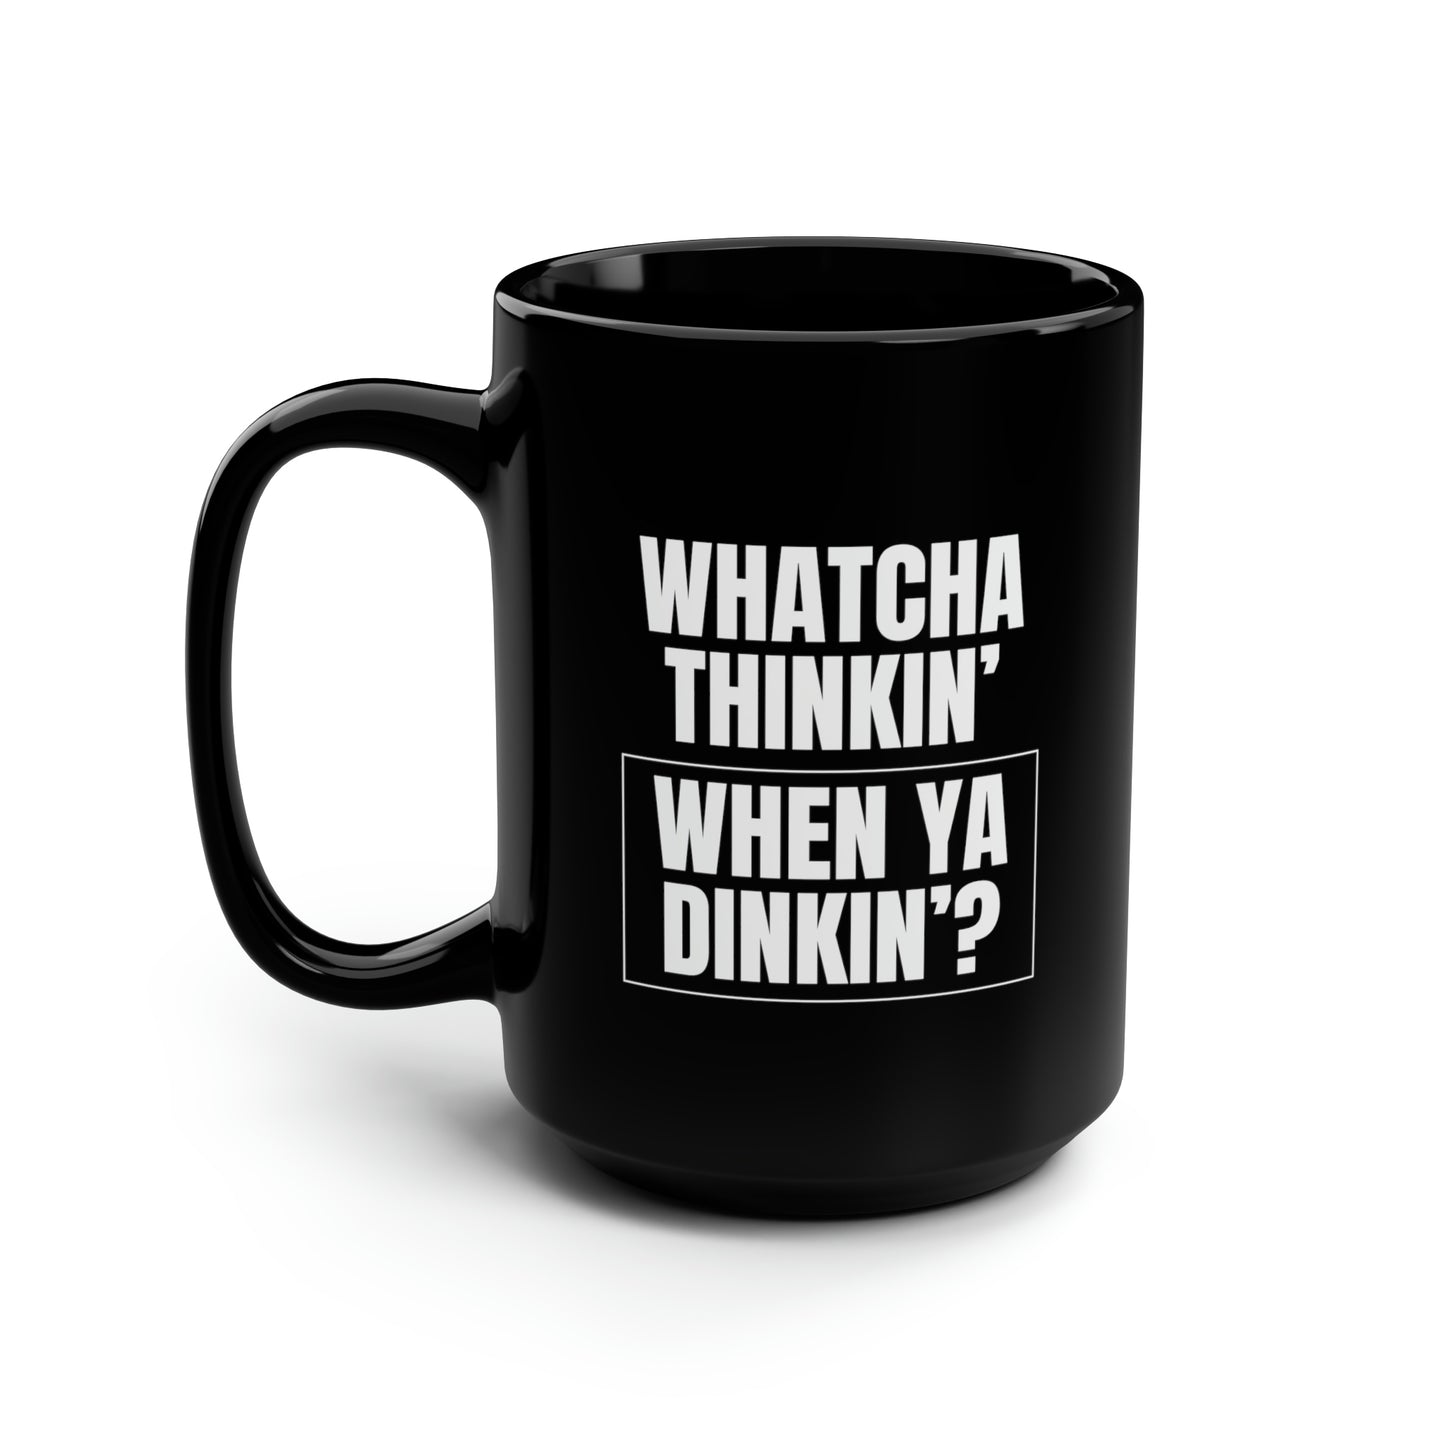 Whatcha Thinkin' When Ya Dinkin'? 15 Oz Black Coffee Mug